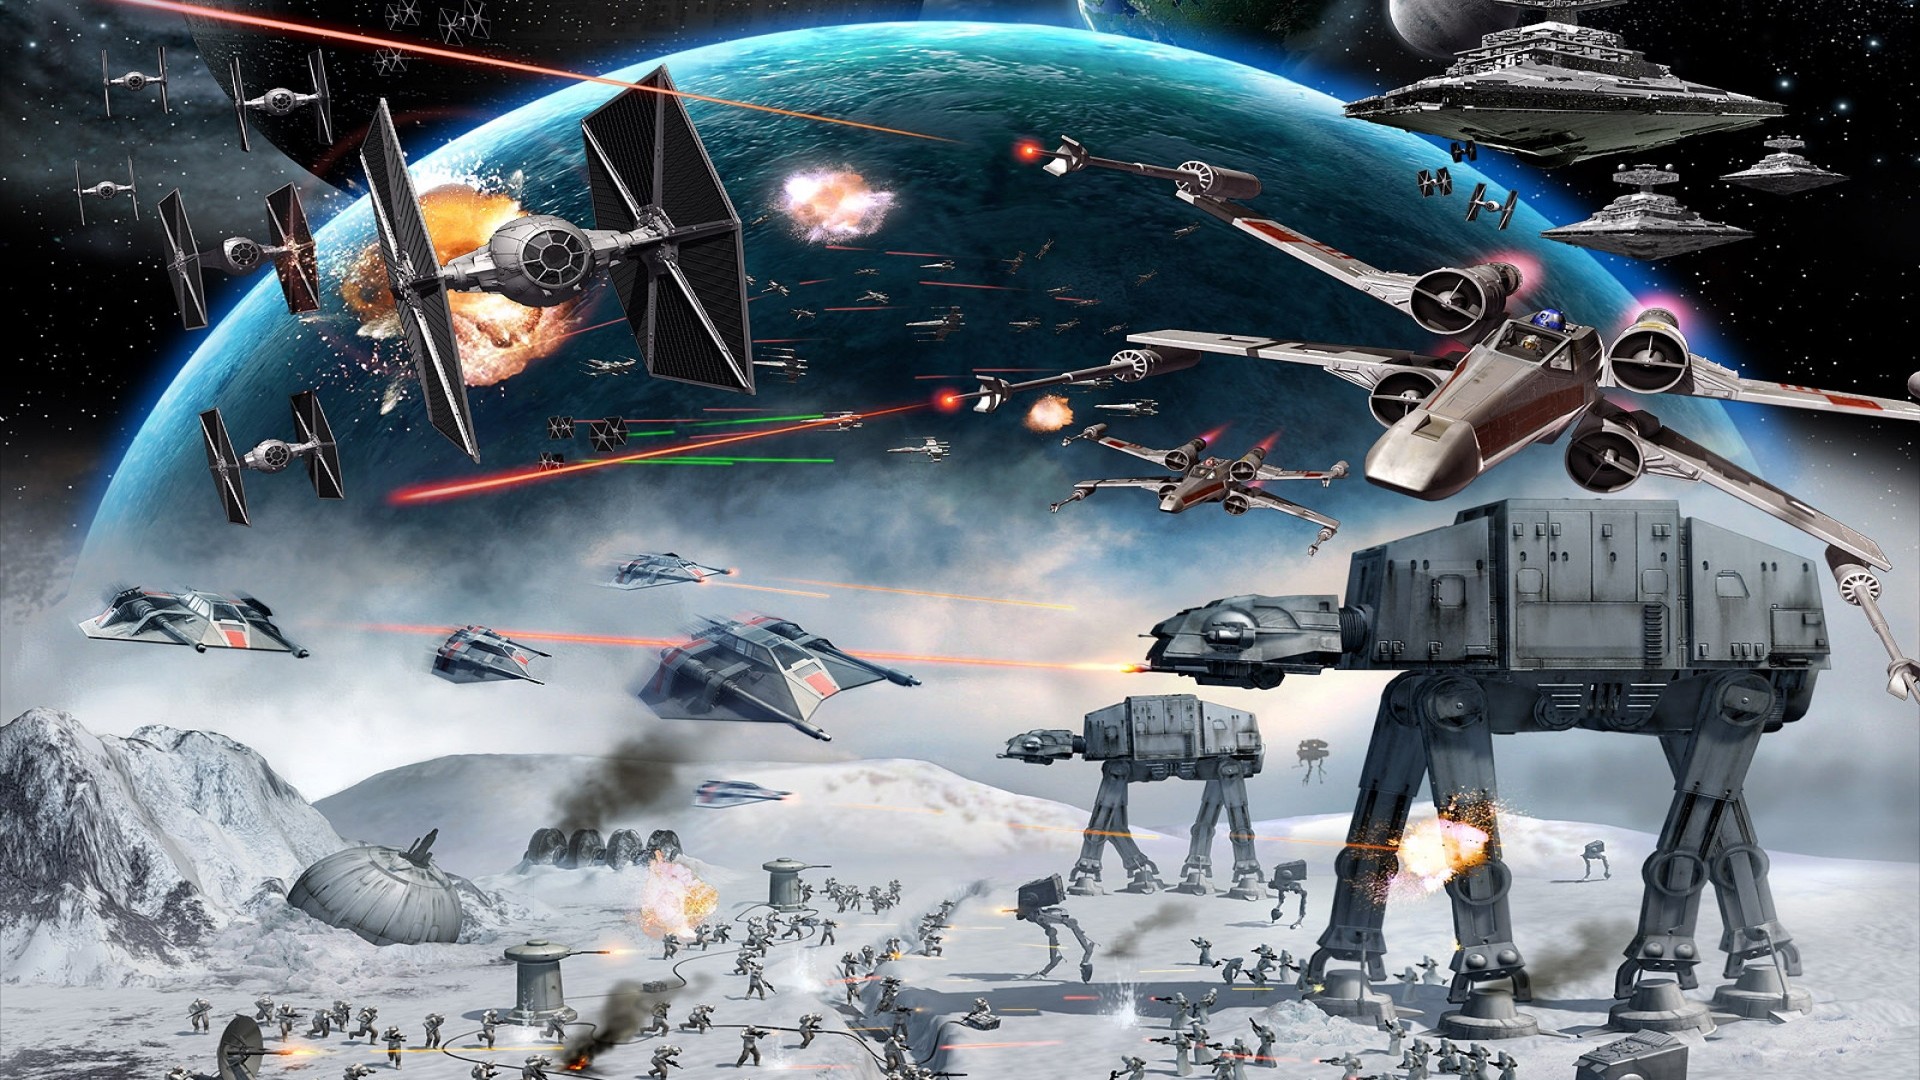 Star Wars War Between The Two Empires Universe Space Starfleet Ships, Wallpaper13.com